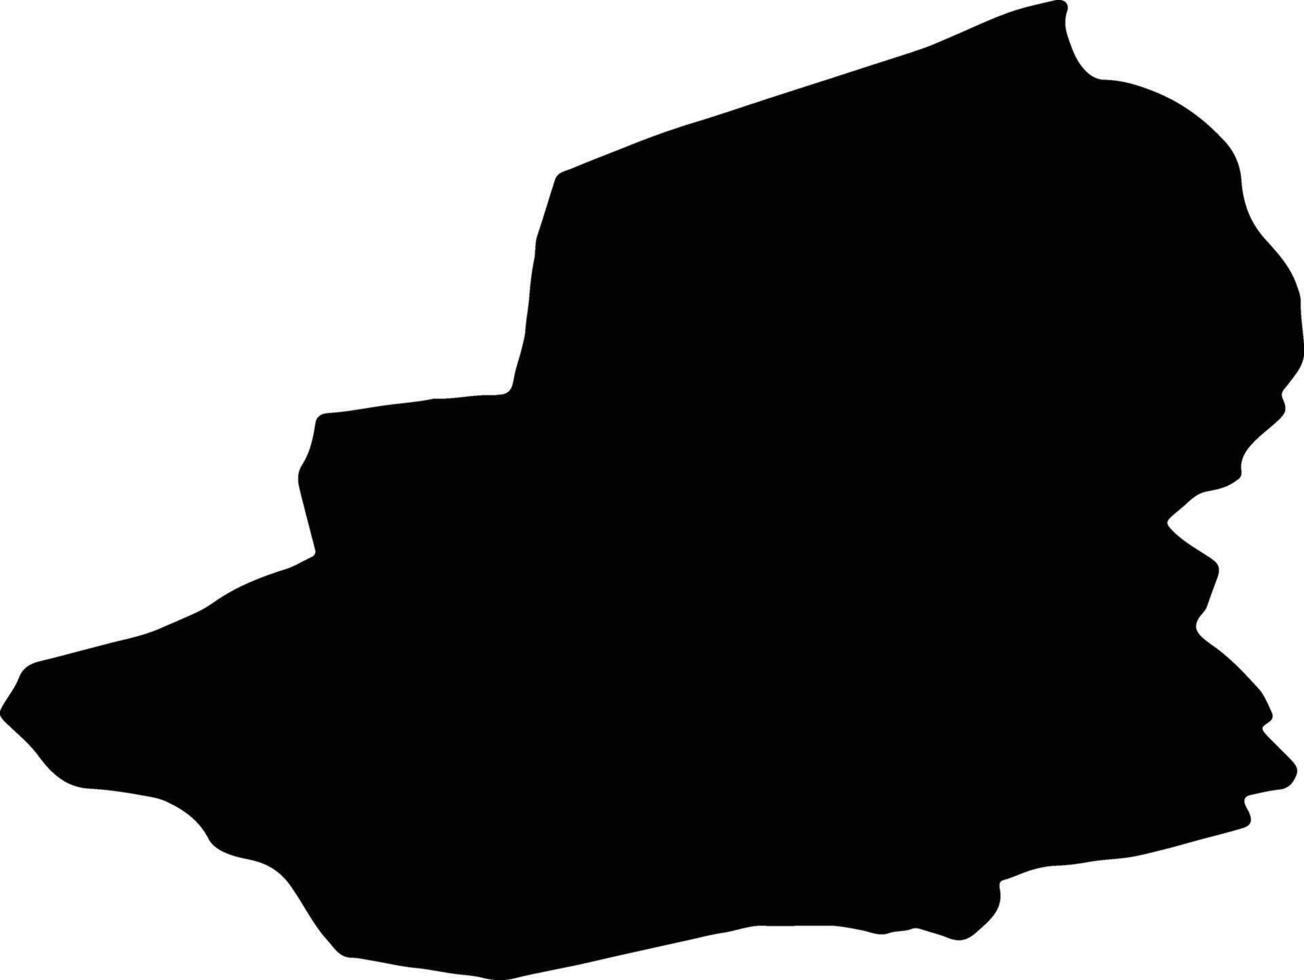 Kars Turkey silhouette map vector